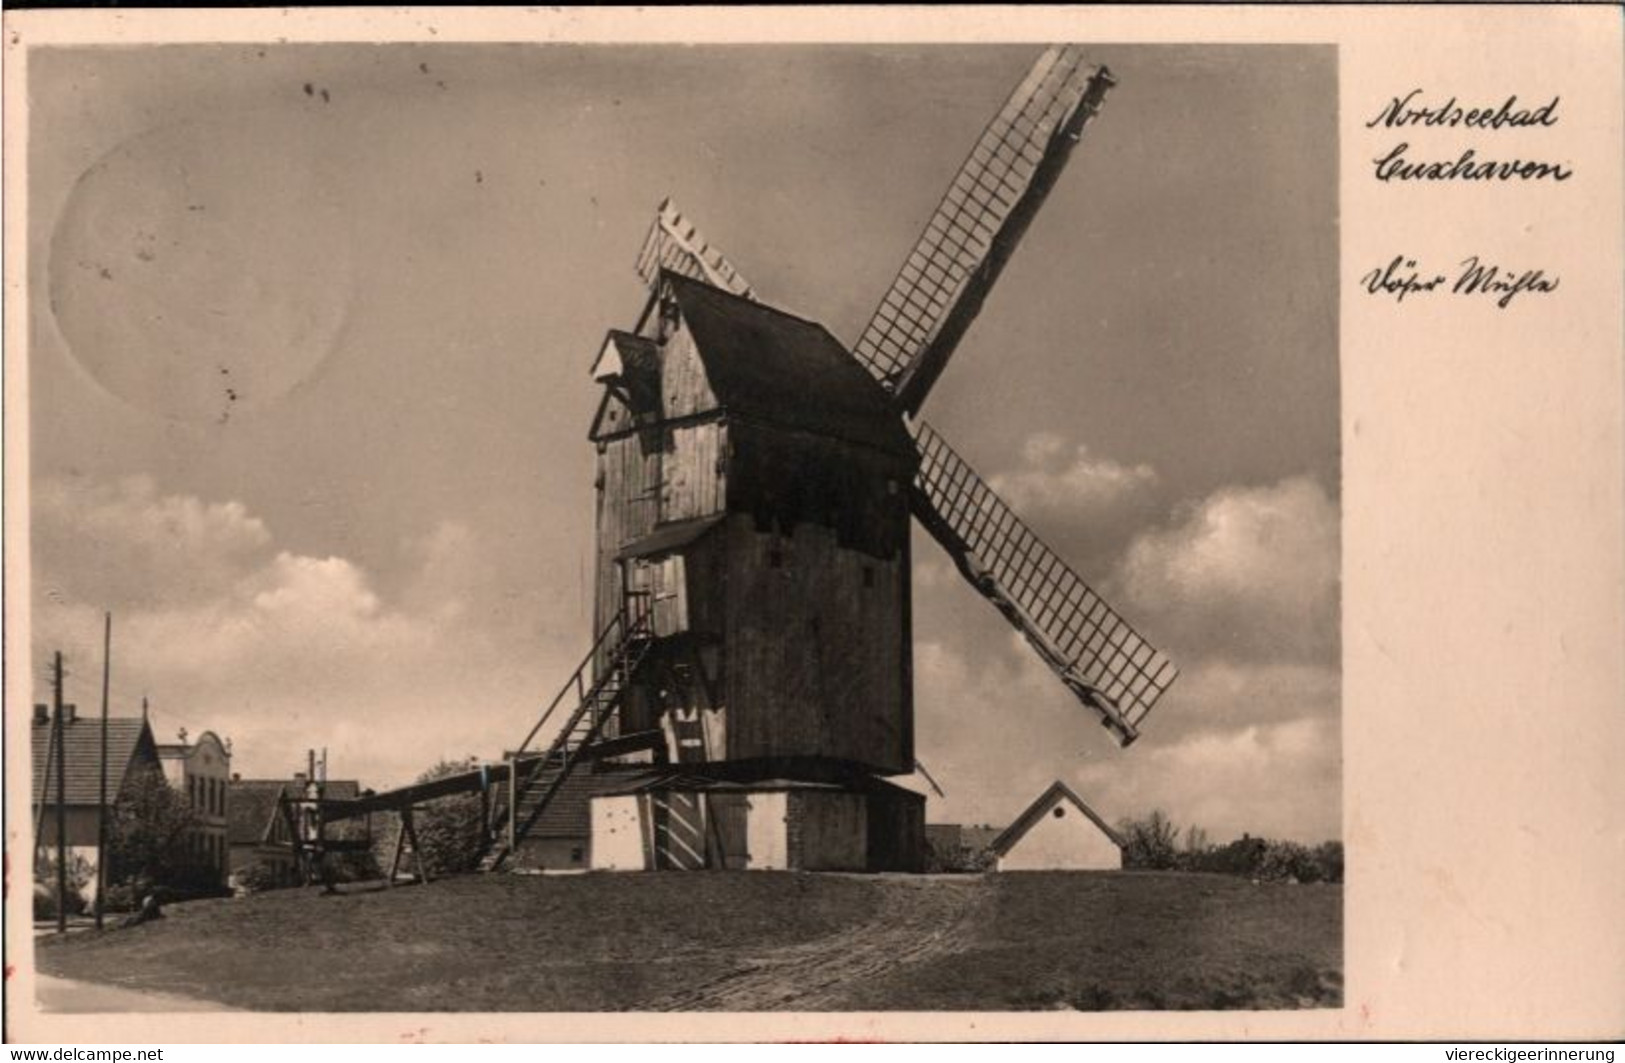 ! 1935 Ansichtskarte Aus Cuxhaven, Döser Mühle, Windmühle, Windmill, Moulin A Vent - Windmills